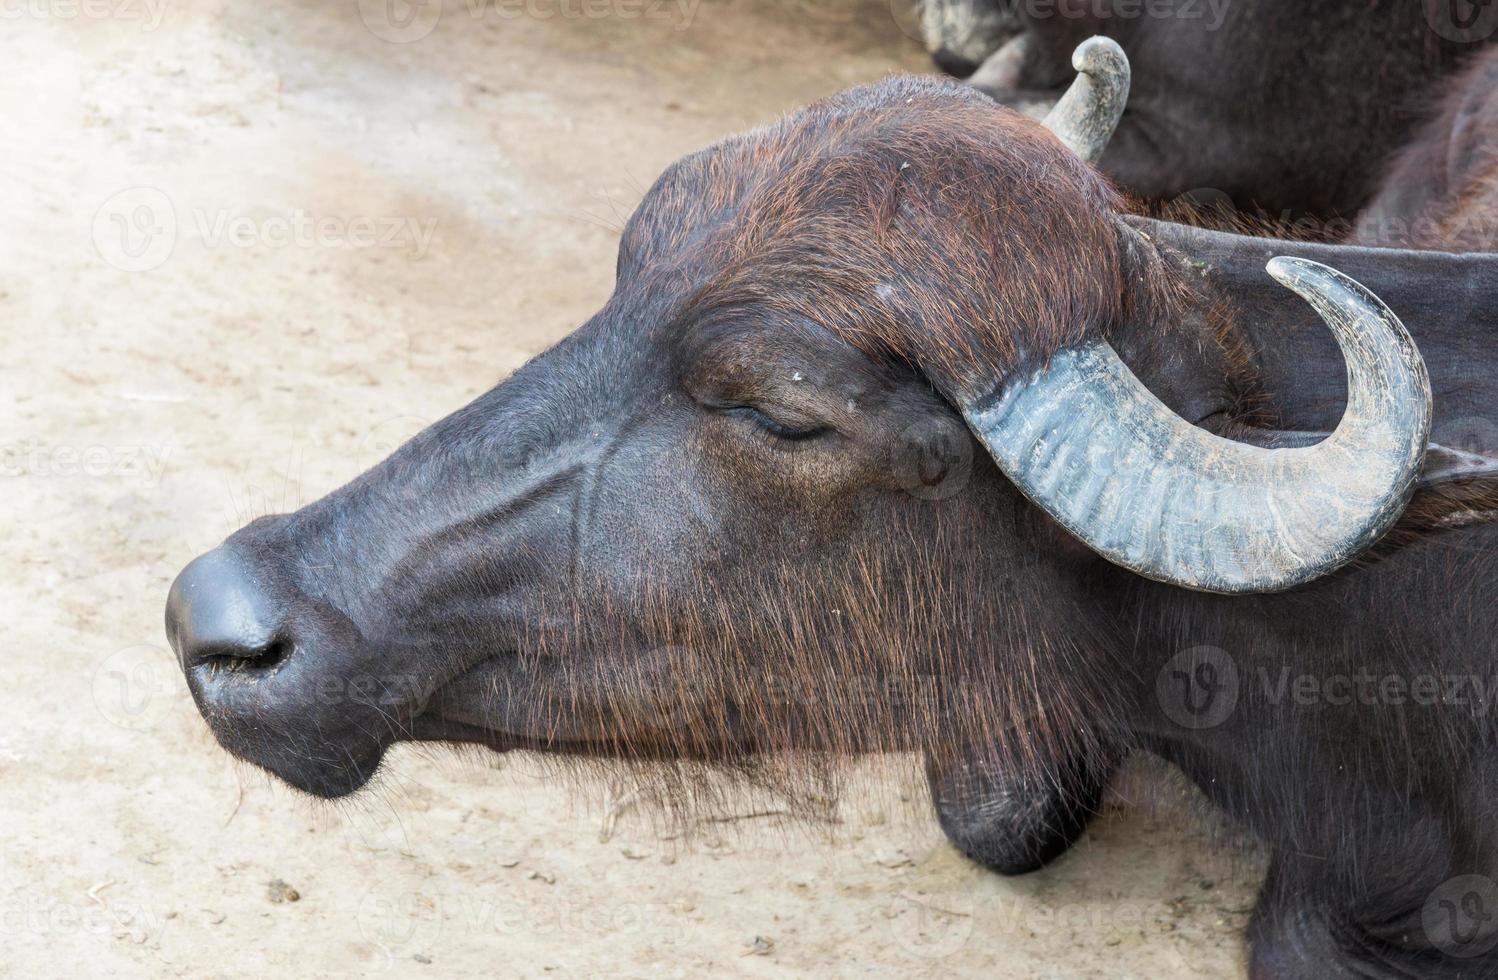 The sleeping buffalo photo